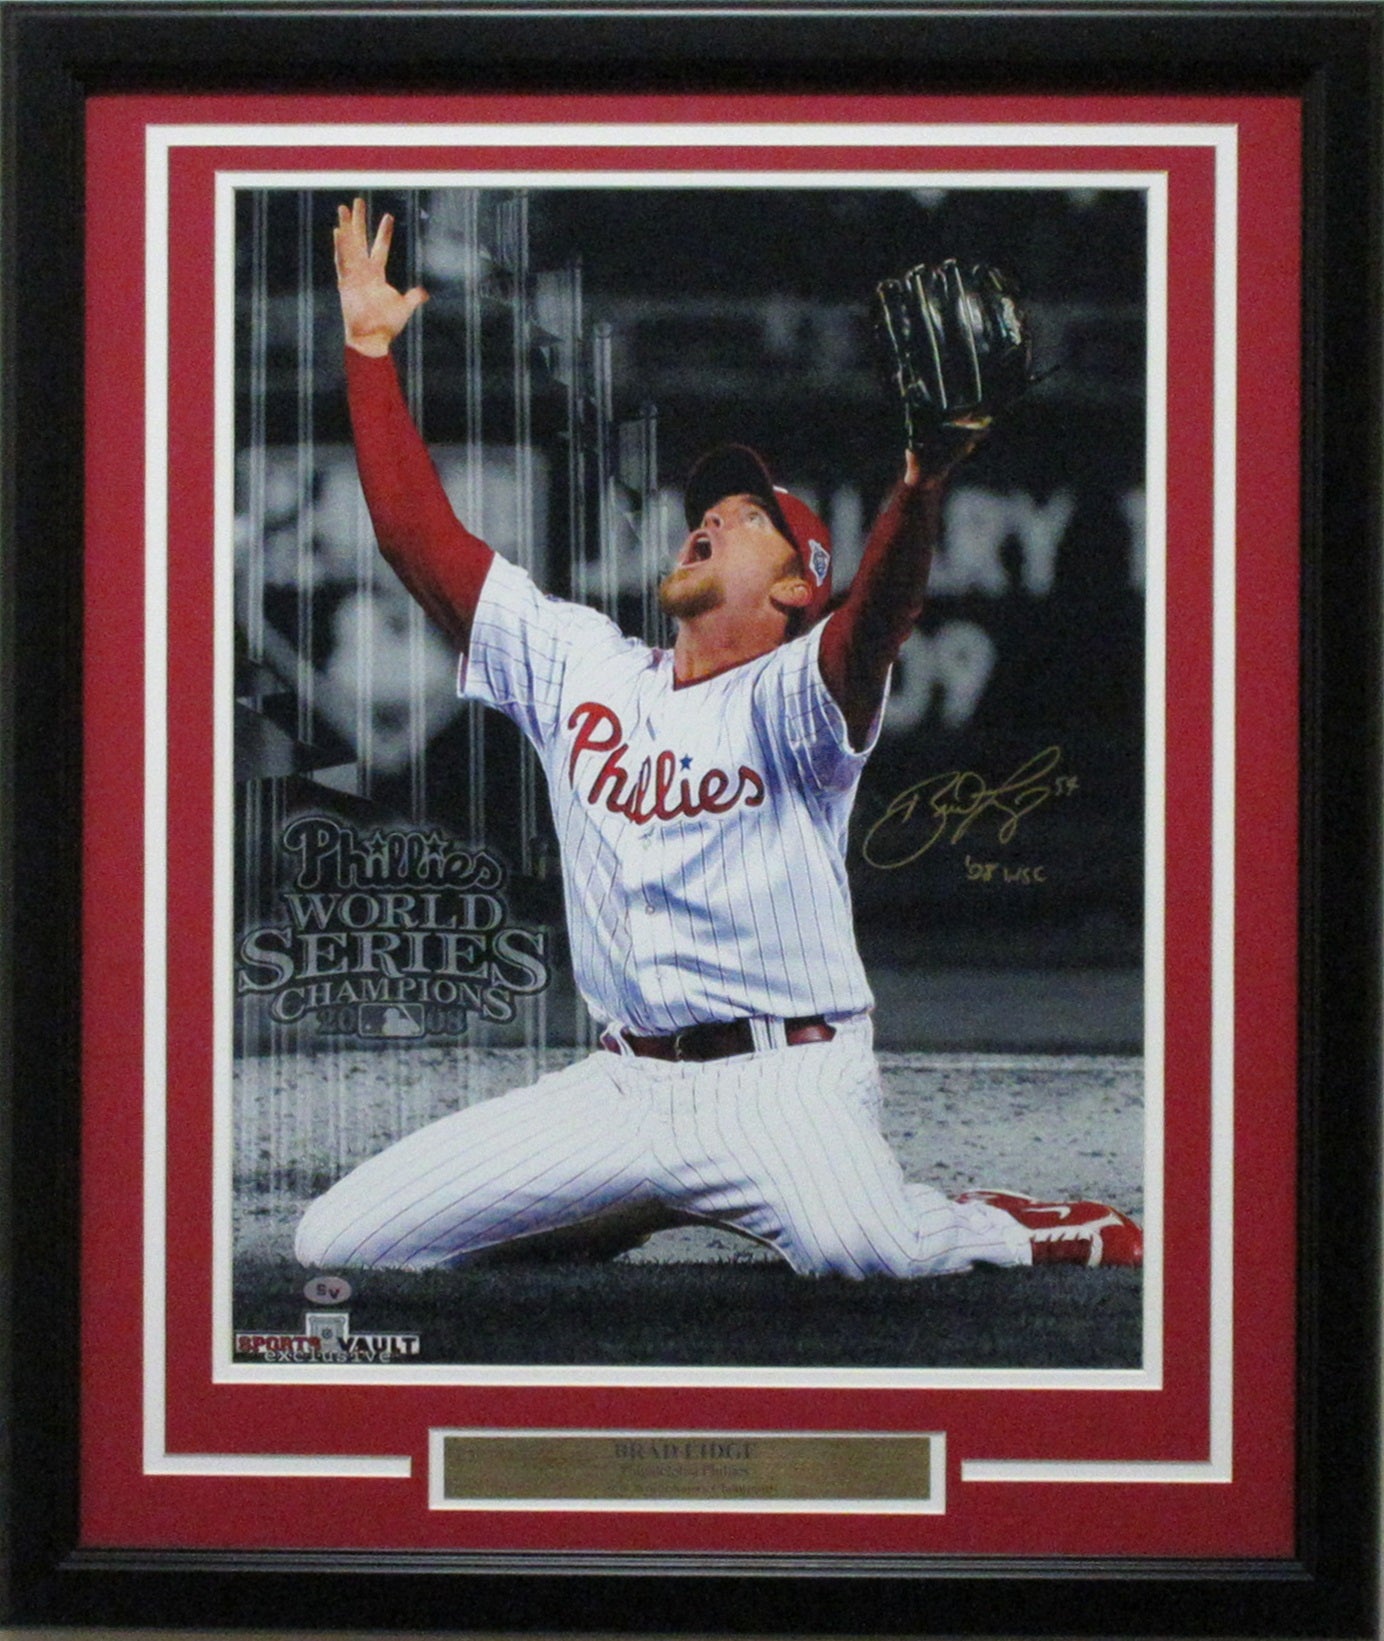 Brad Lidge Philadelphia Phillies Autographed 16x20 World Series Photo -  Sports Vault Shop